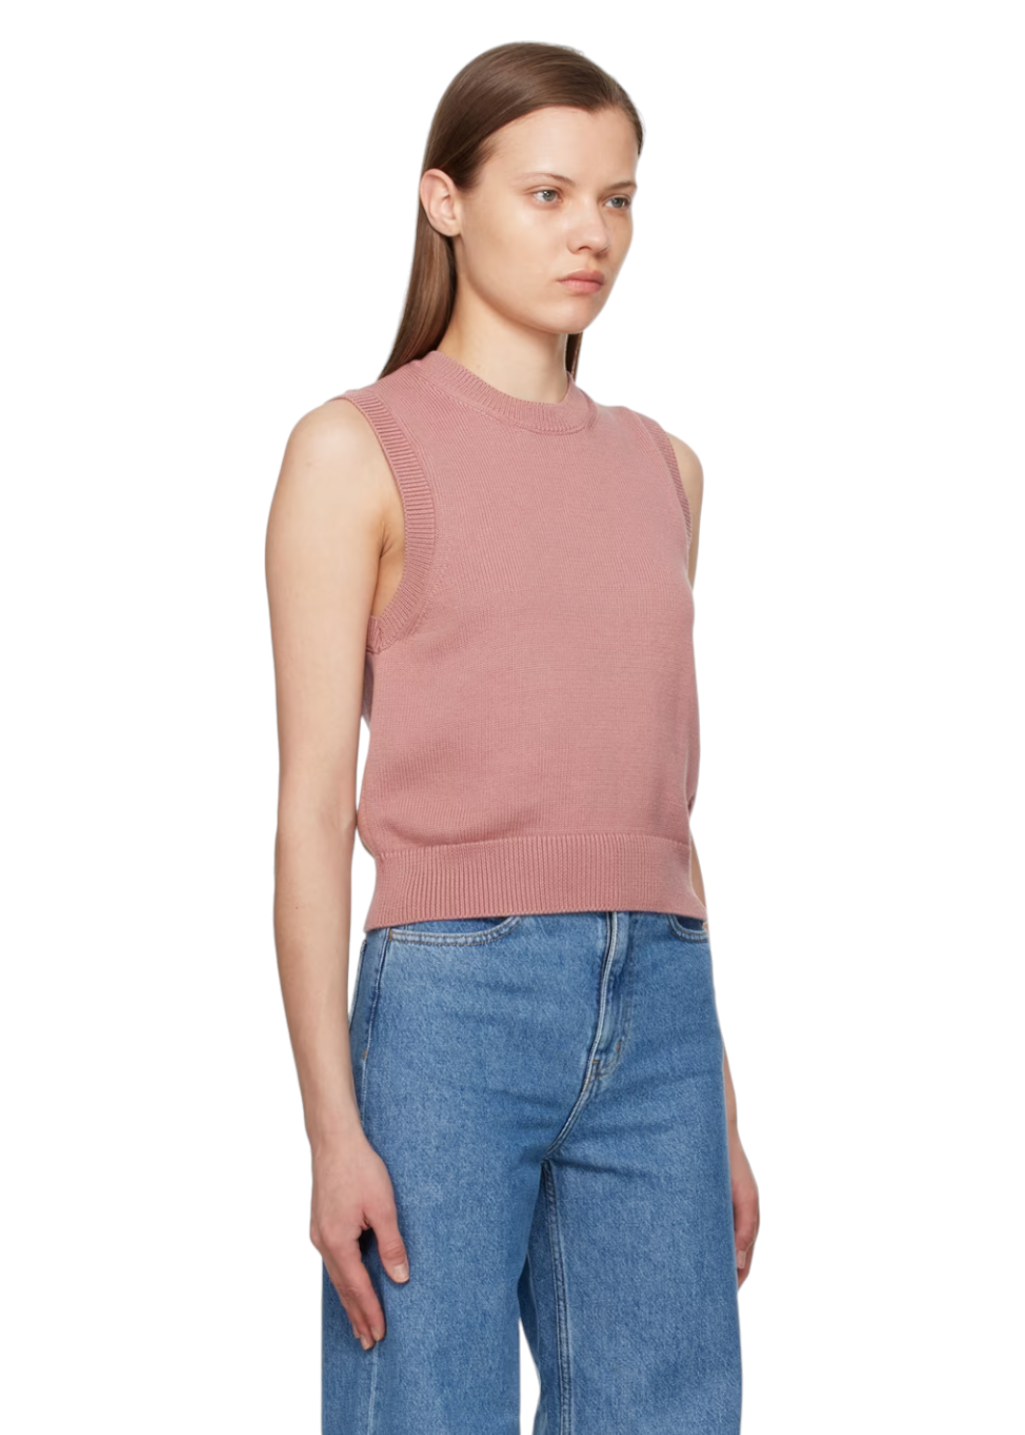 Carhartt WIP - W' Chester Vest Sweater - Glassy Pink - Hardpressed Print Studio Inc.